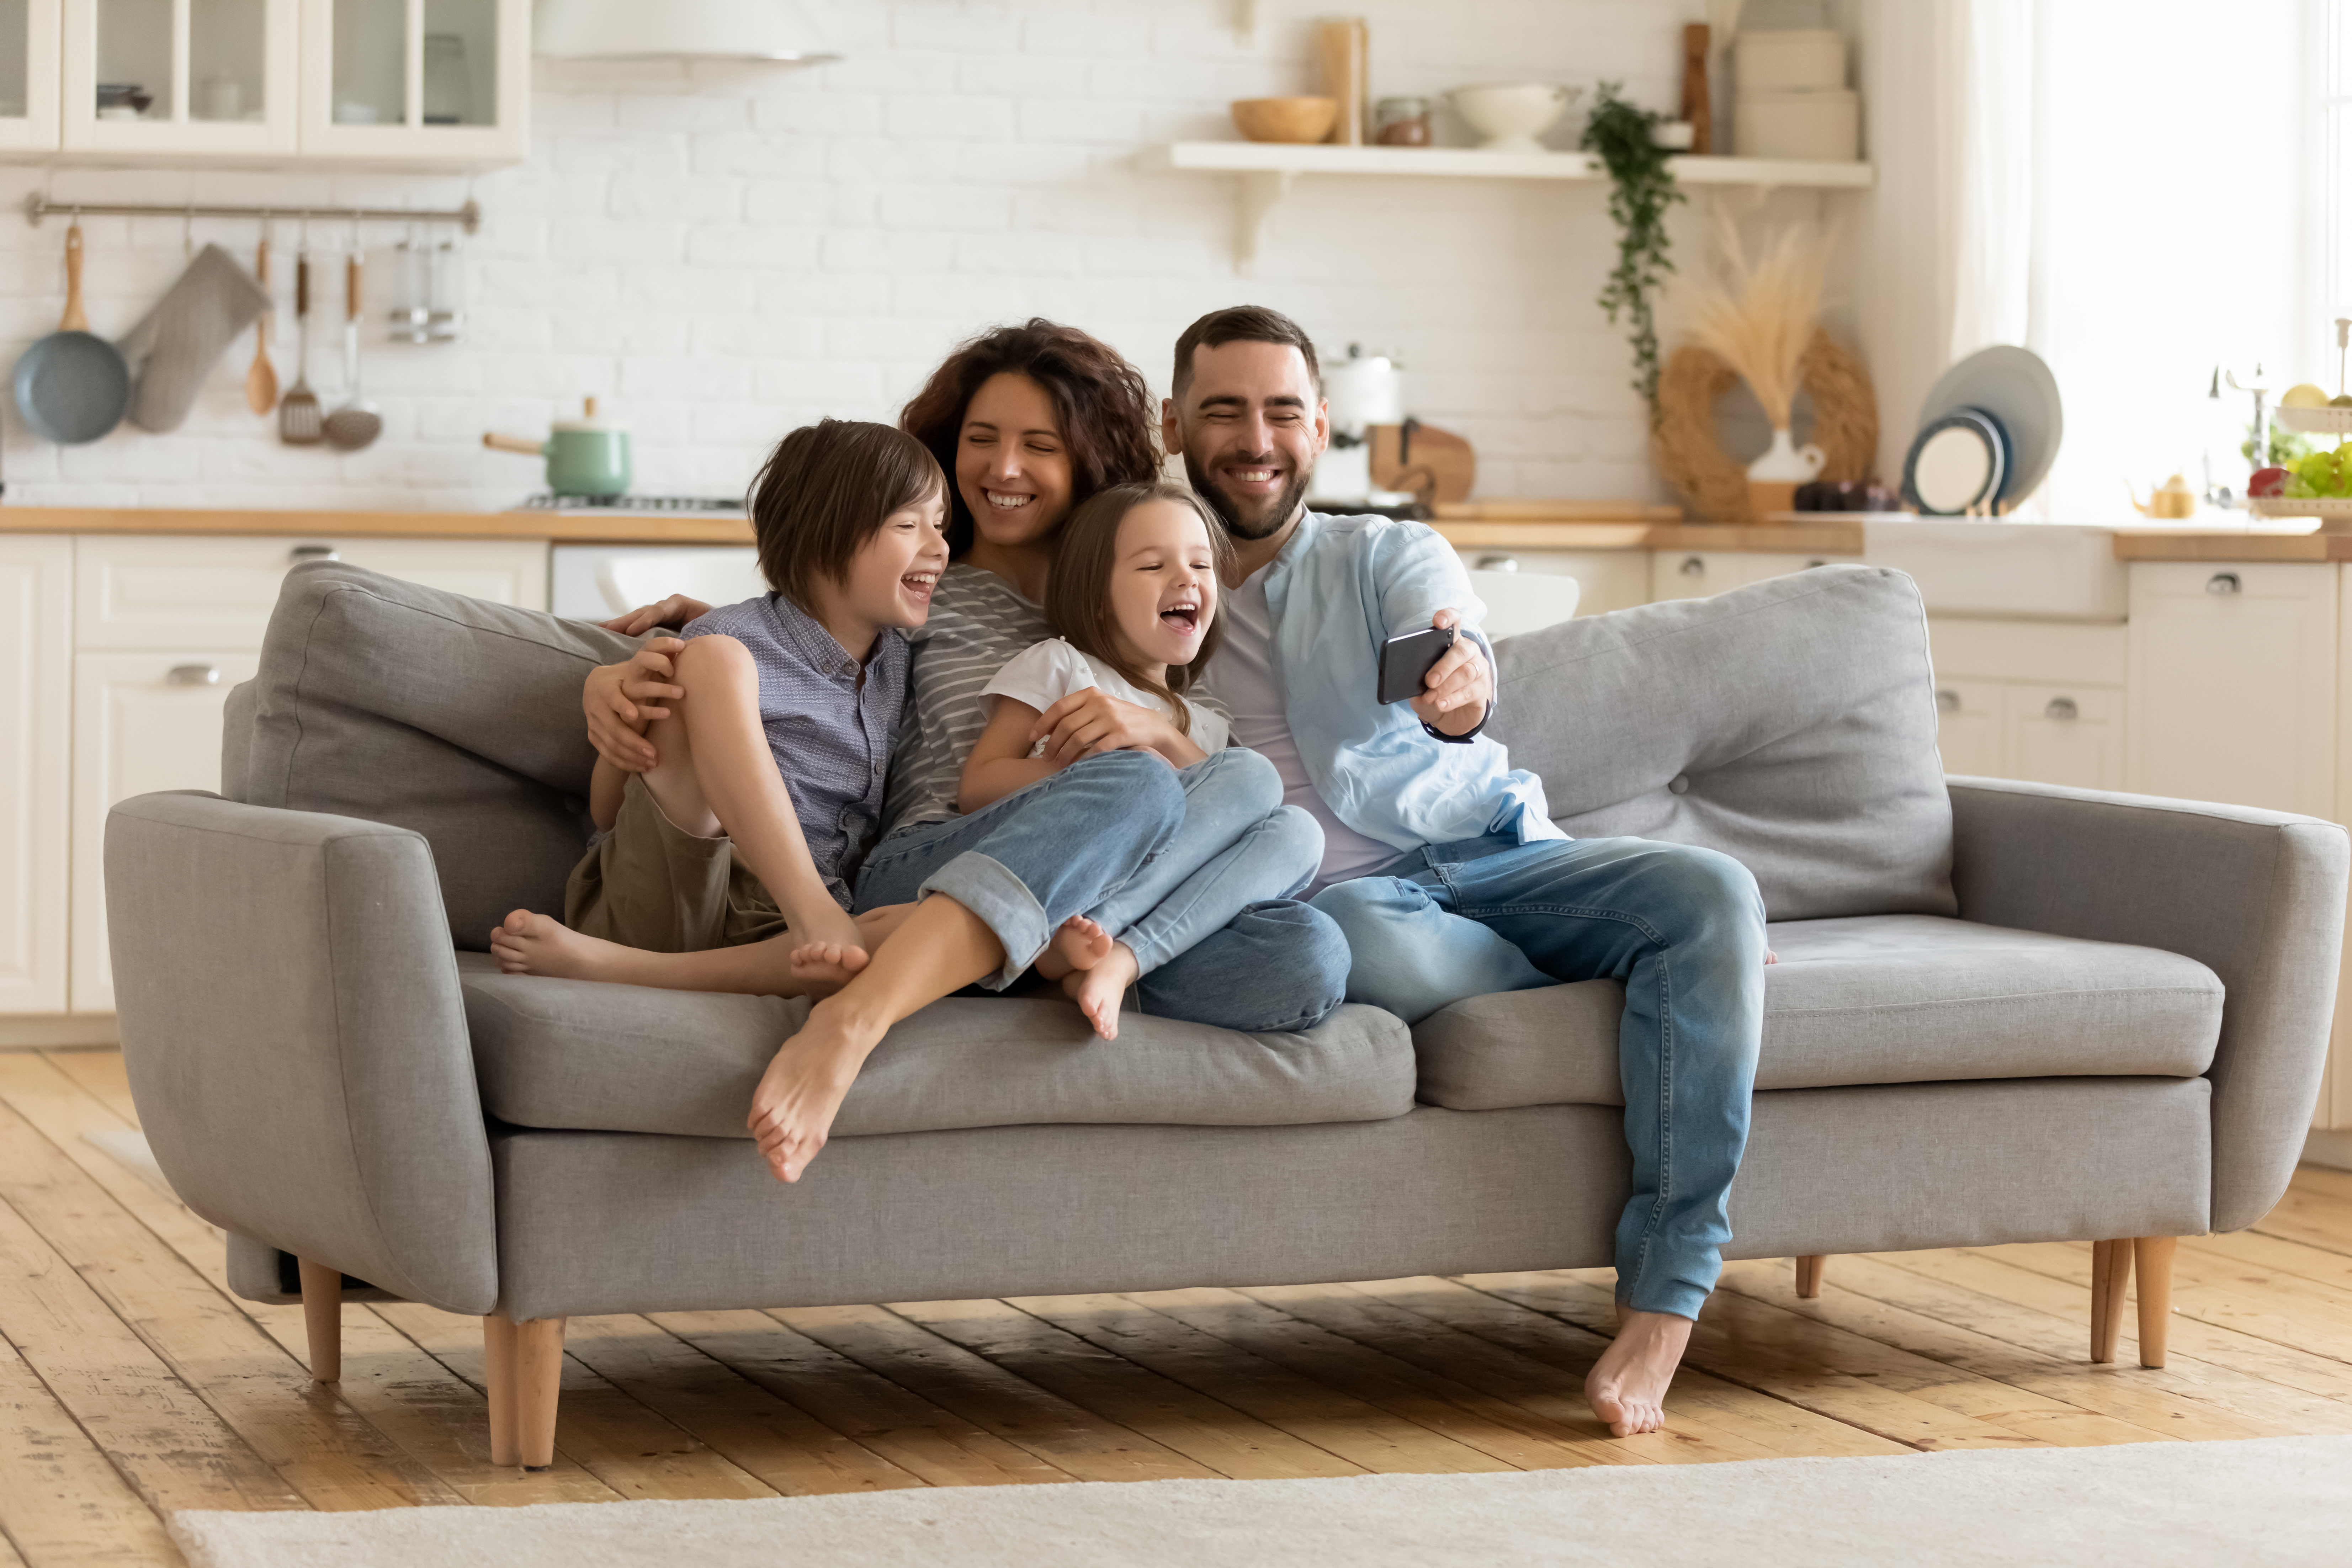 Une famille heureuse | Source : Shutterstock